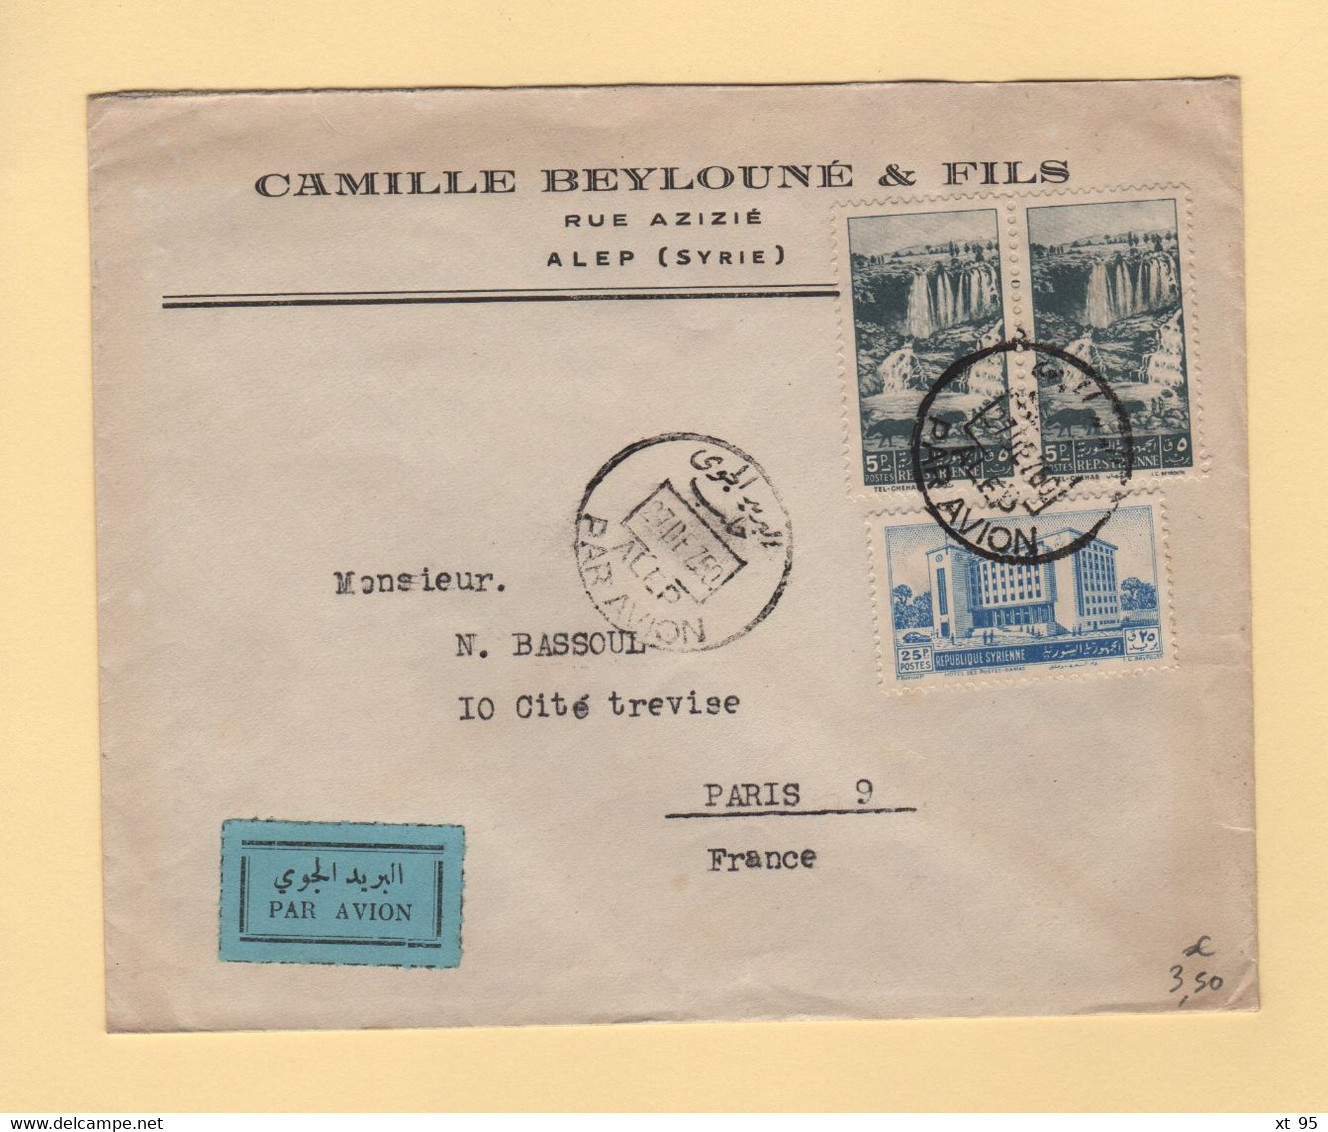 Syrie - Alep - 1950 - Par Avion Destination France - Syrië